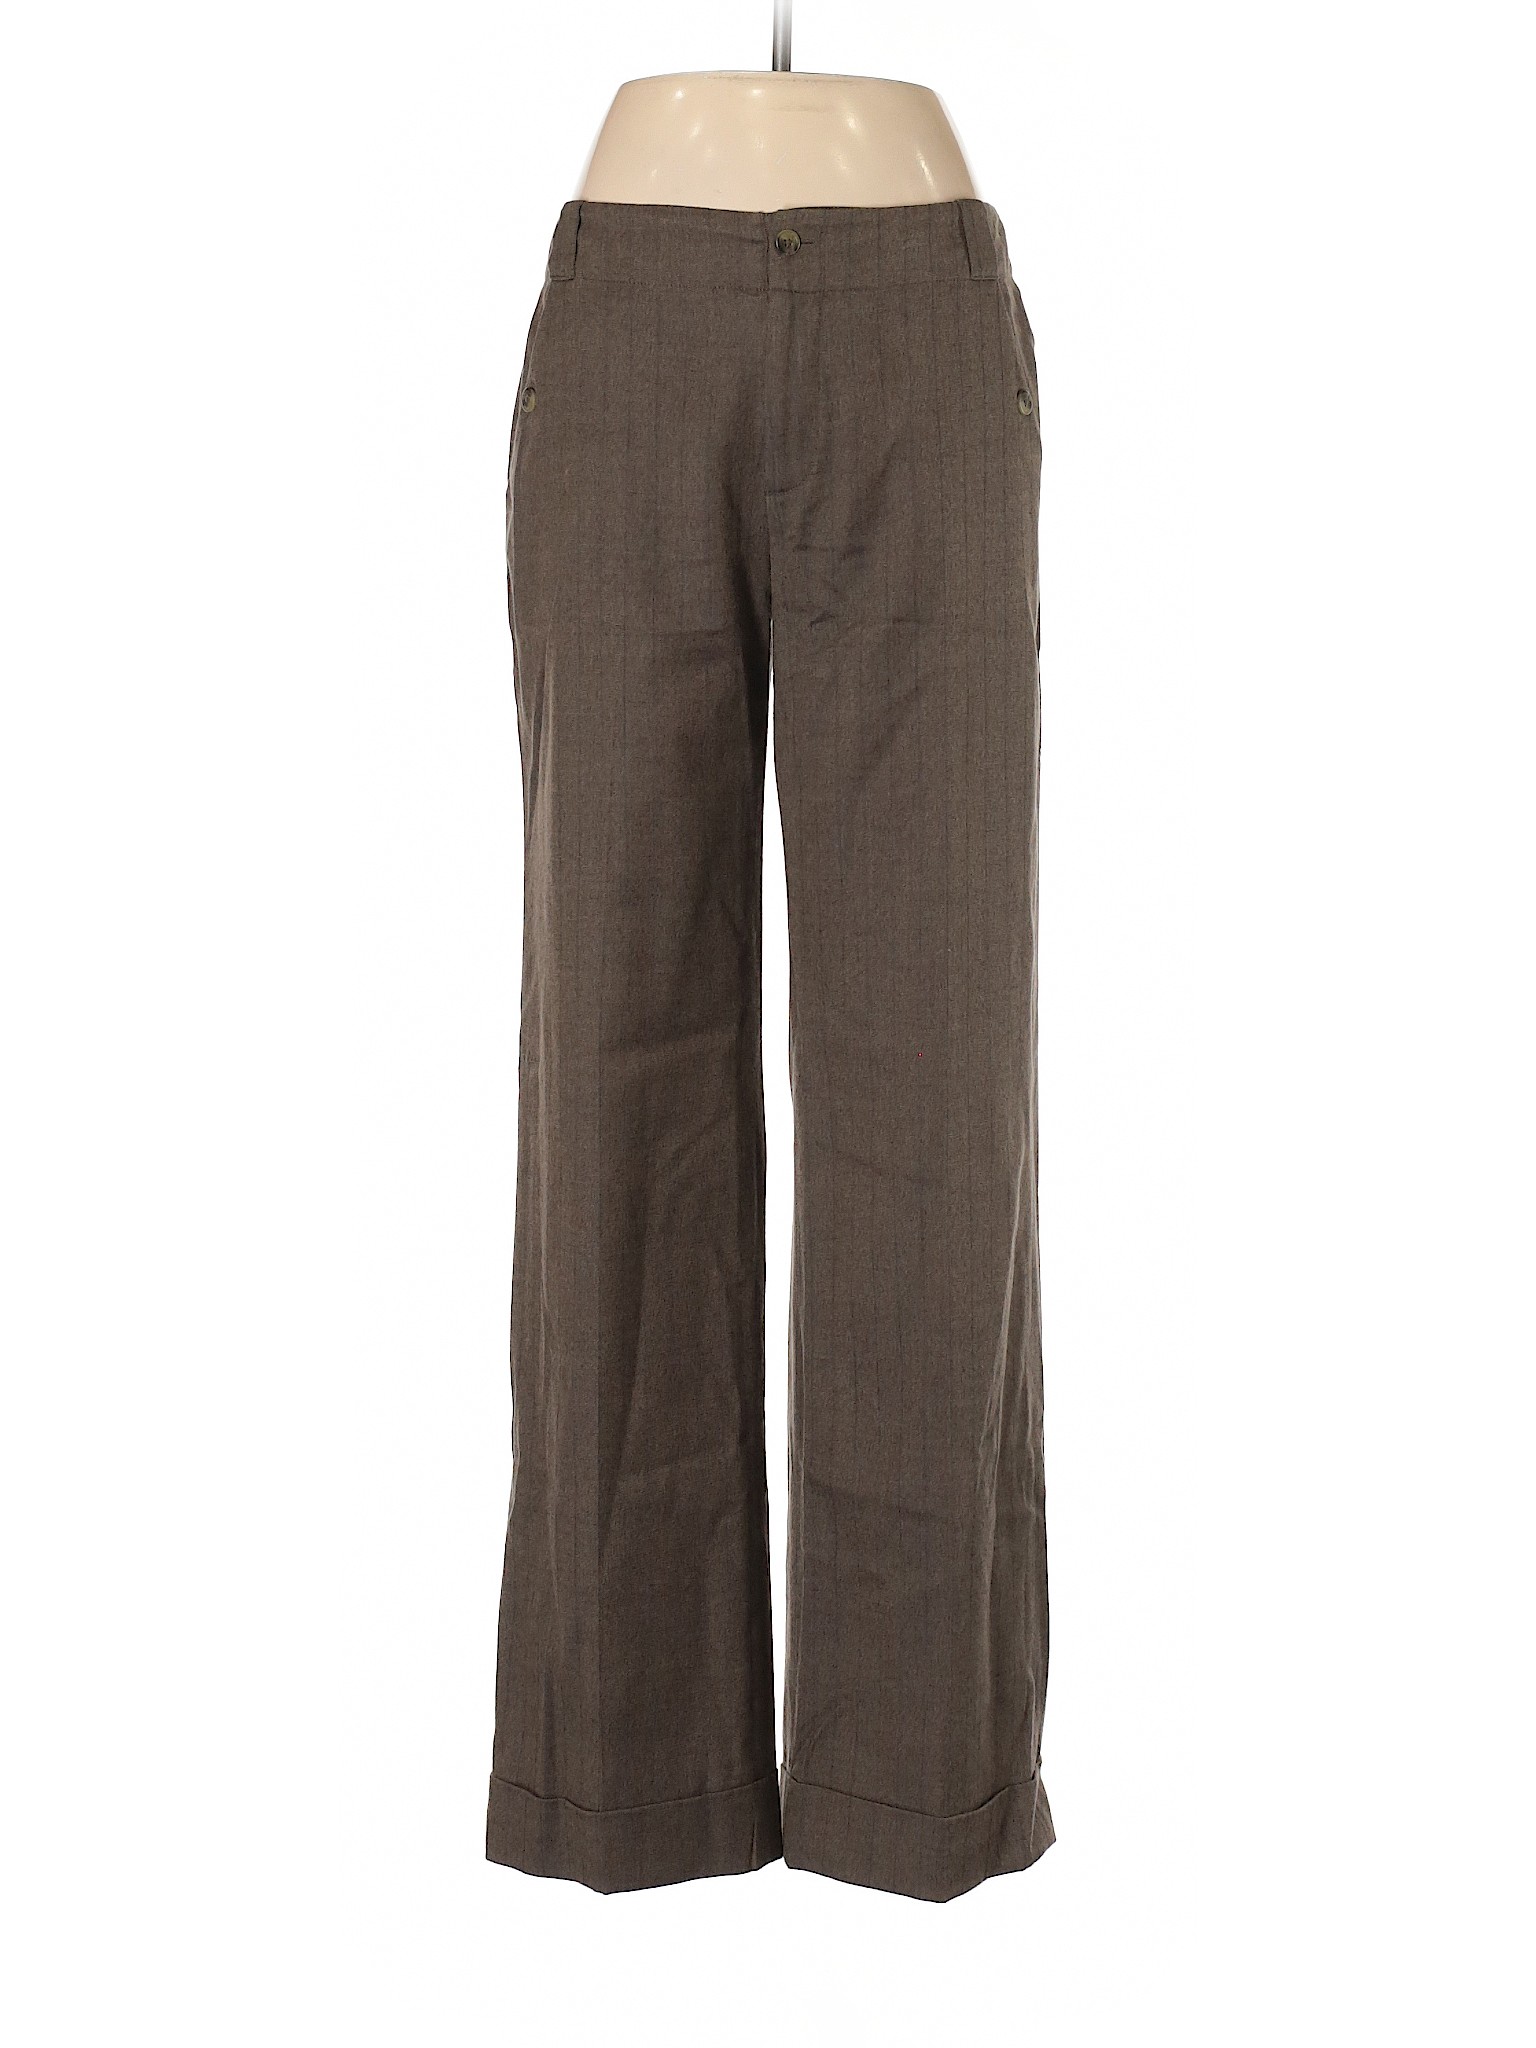 Sundance Women Brown Wool Pants 6 | eBay